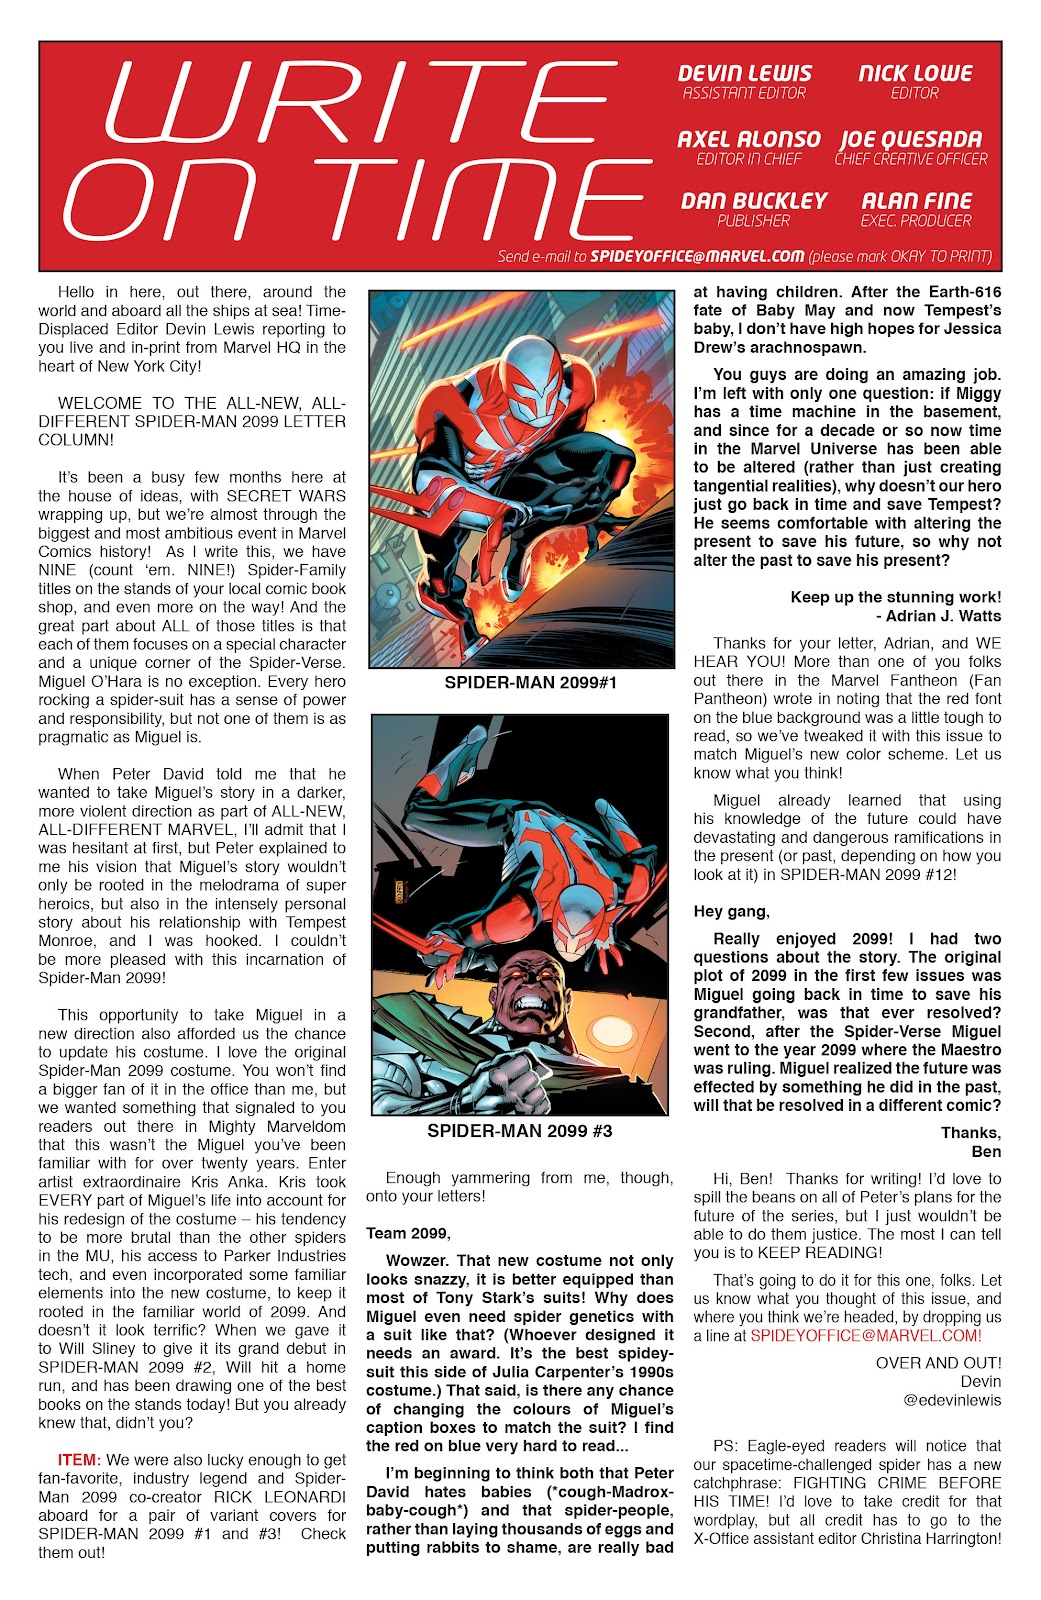 Spider-Man 2099 (2015) issue 4 - Page 23